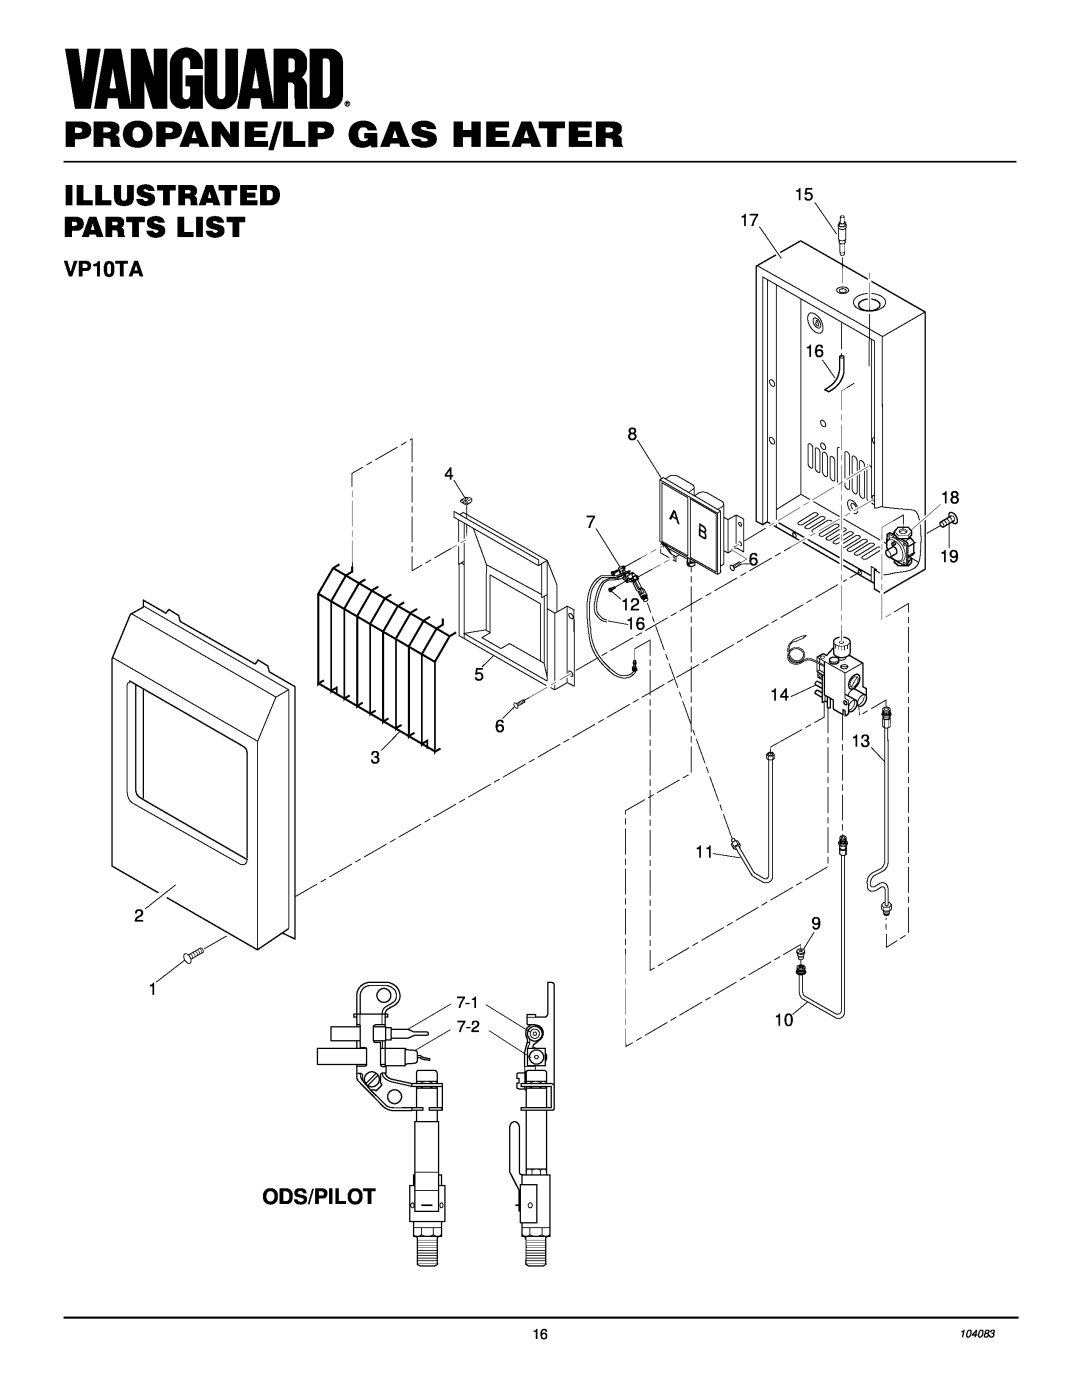 Desa VP10TA installation manual Illustrated Parts List, Ods/Pilot, Propane/Lp Gas Heater, 8 4, 14 13 11, 104083 